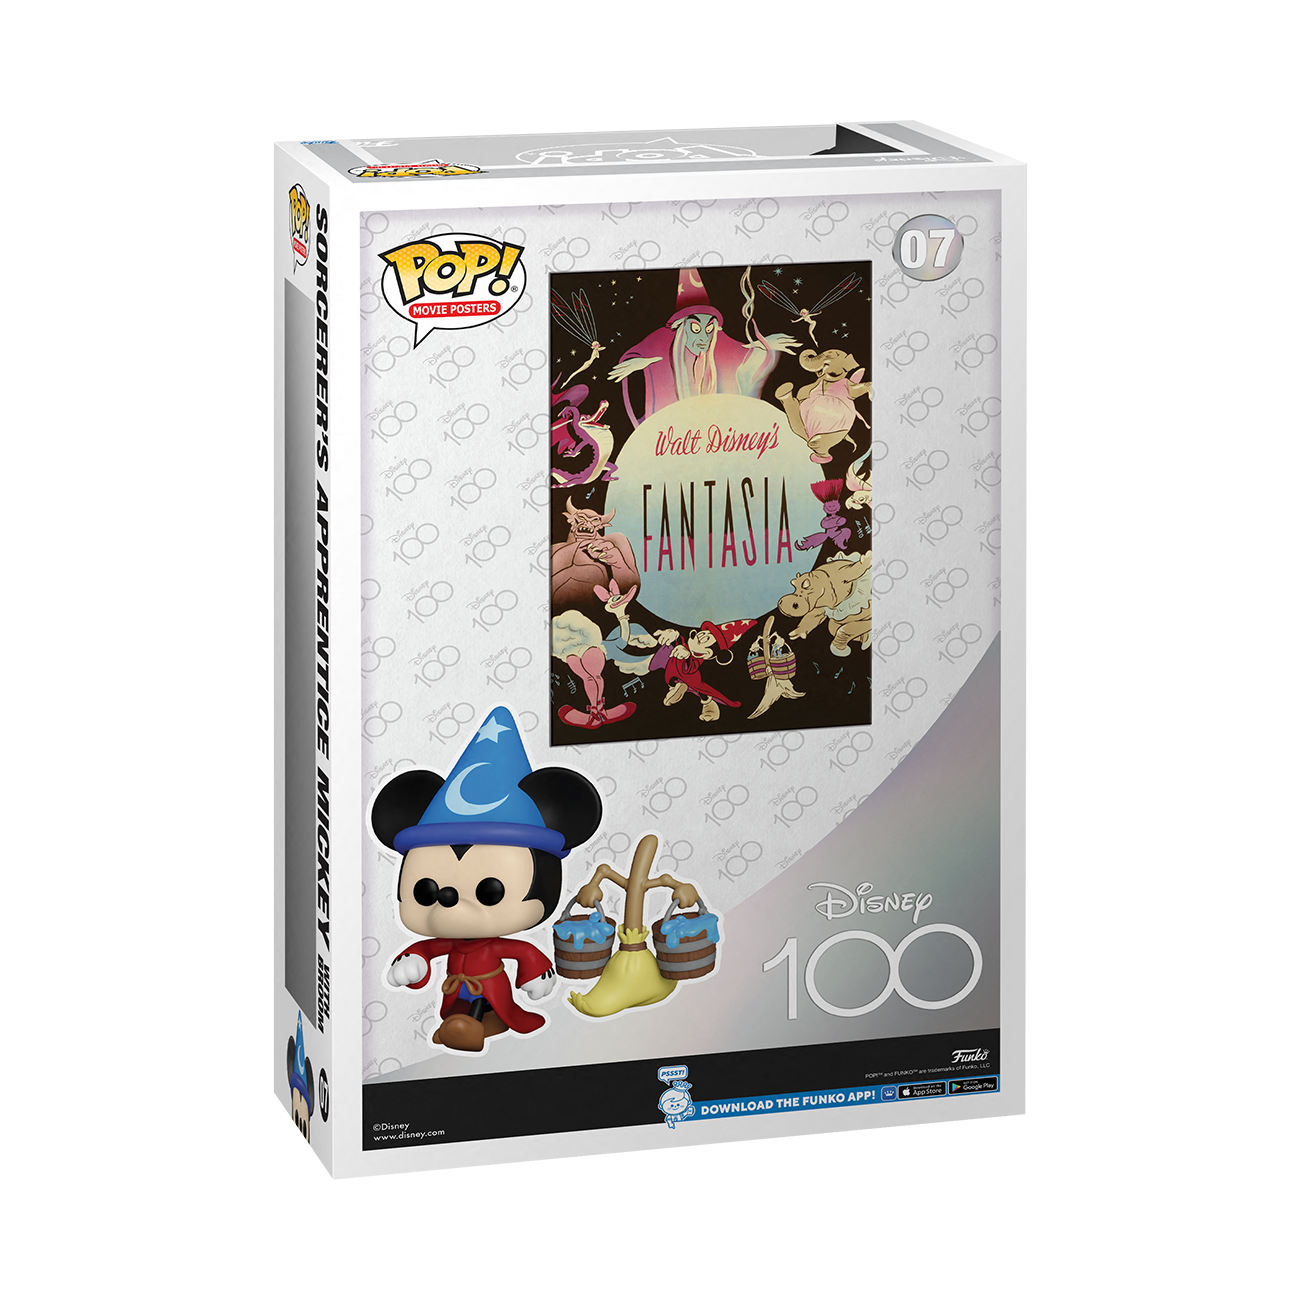 Funko Pop! Movie Poster: Disney 100 - Fantasia Vinyl Figure - image 3 of 6